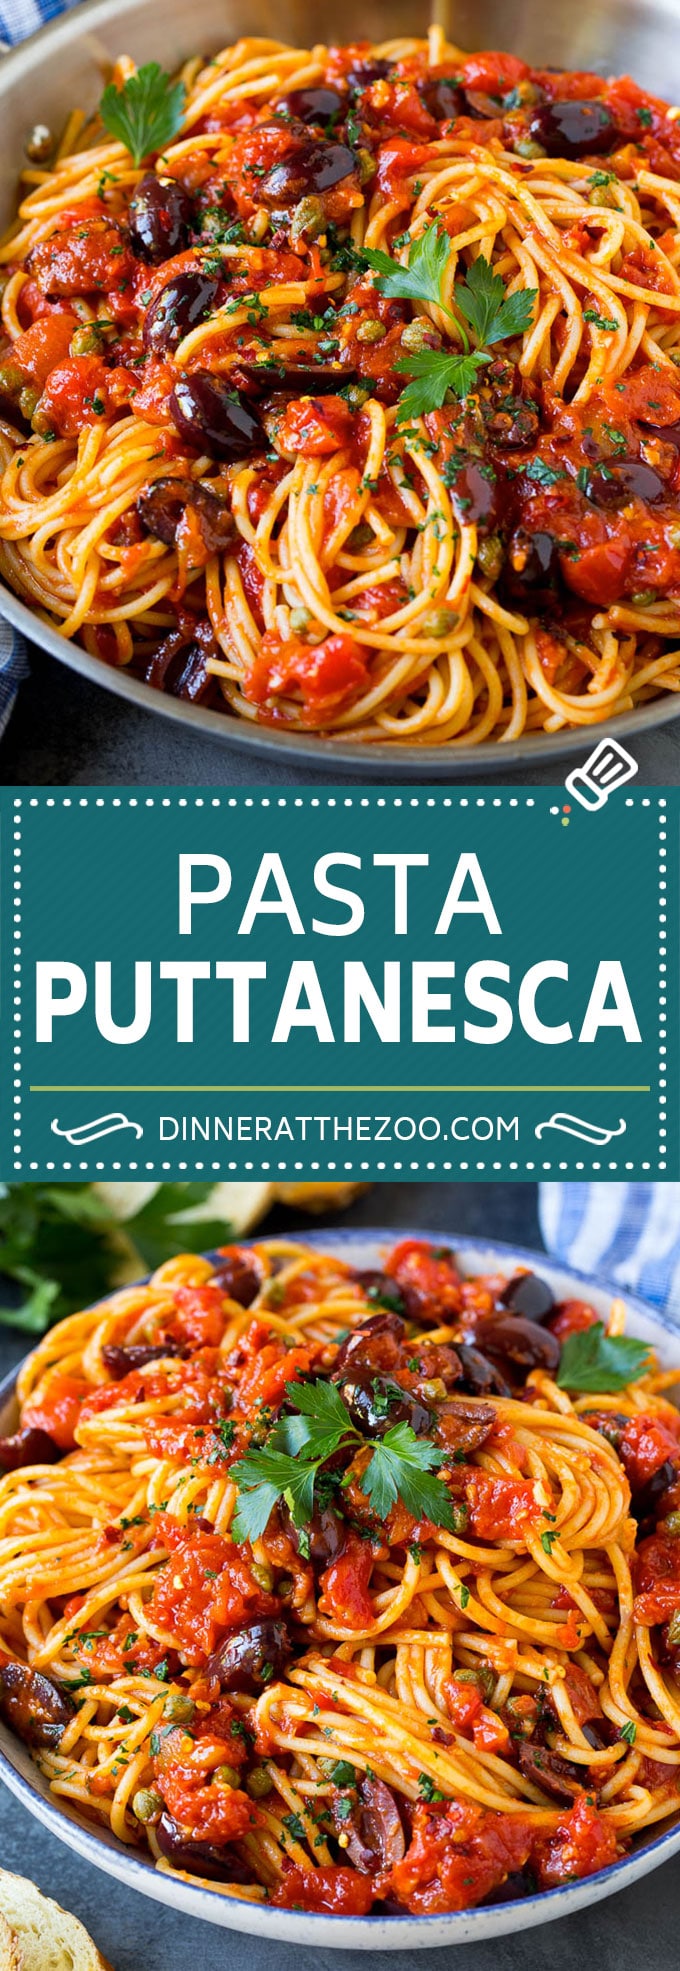 Receta de pasta puttanesca #pasta #tomates # aceitunas #comida italiana # cena #dinneratthezoo